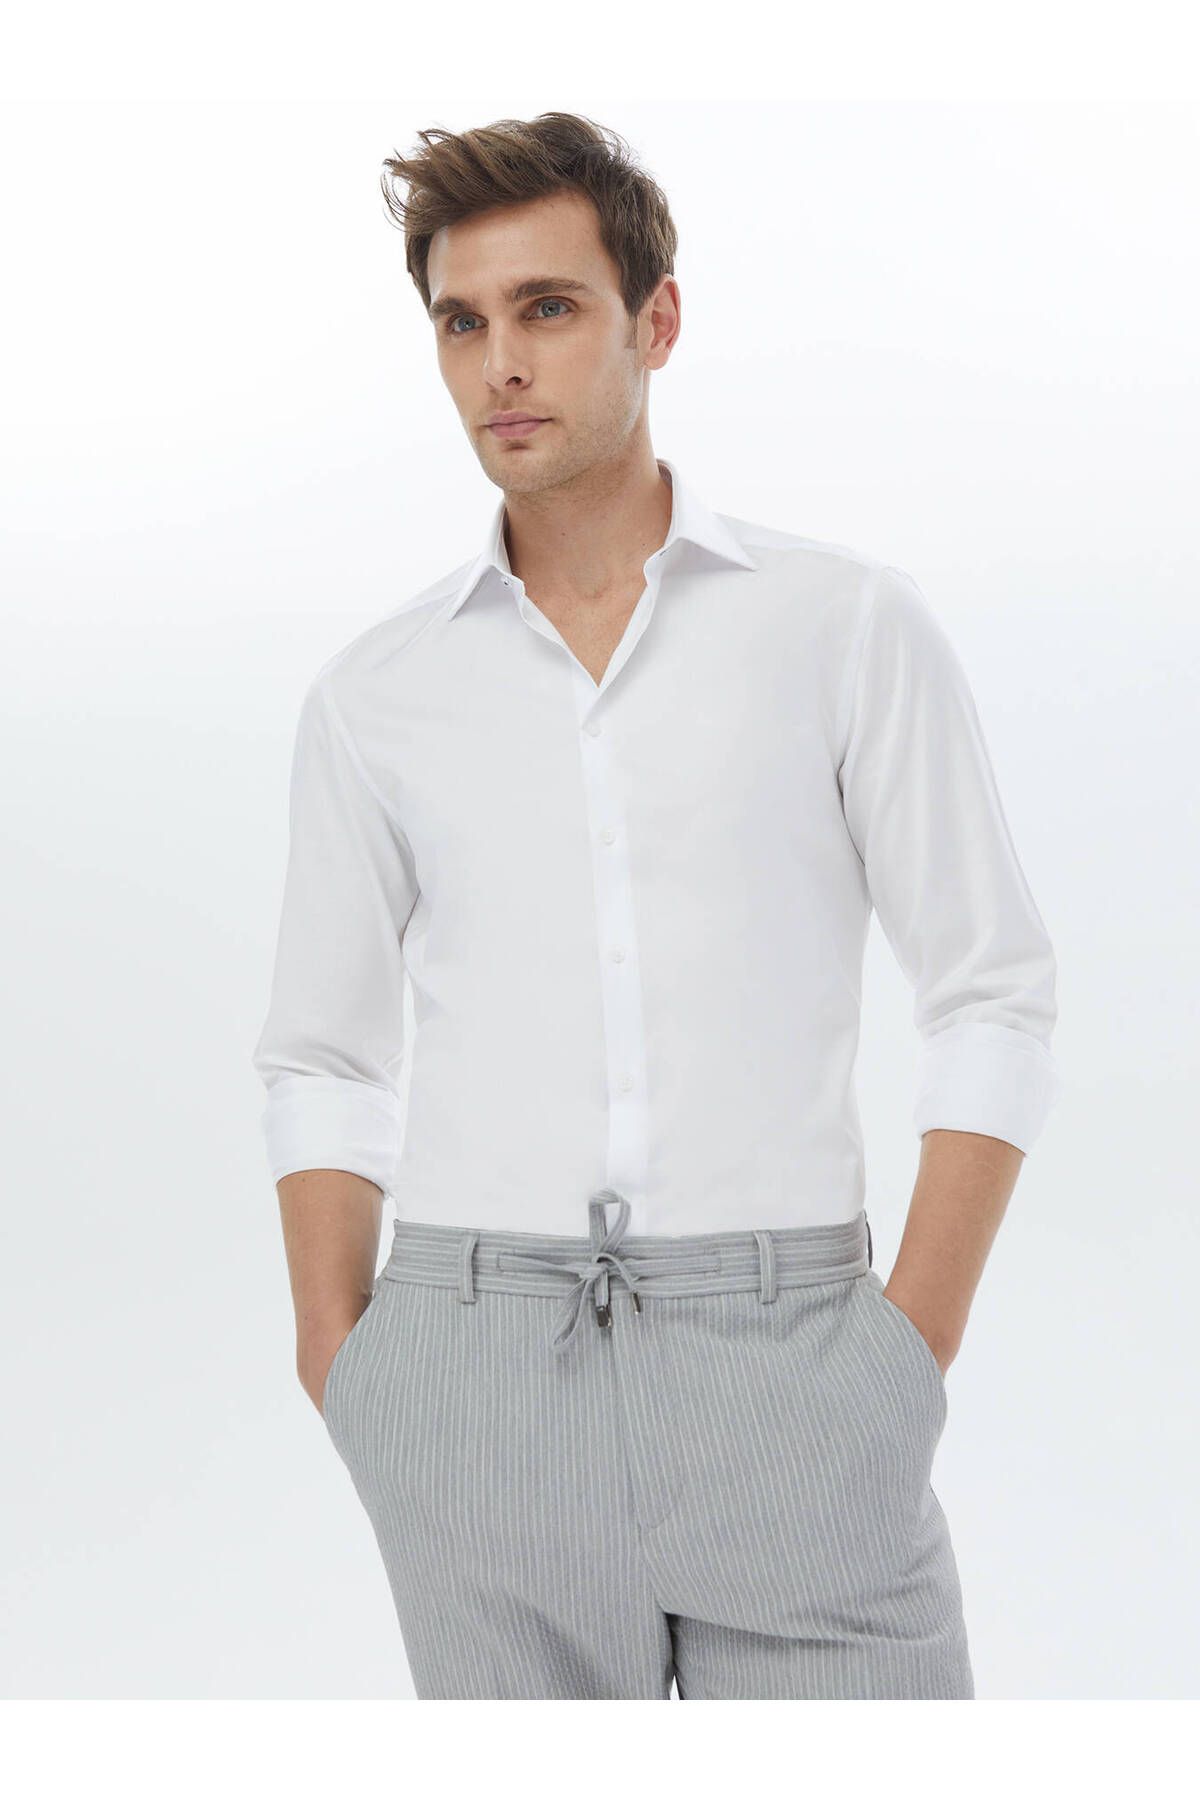 Kip Beyaz Düz Slim Fit Dokuma Klasik %100 Pamuk Gömlek